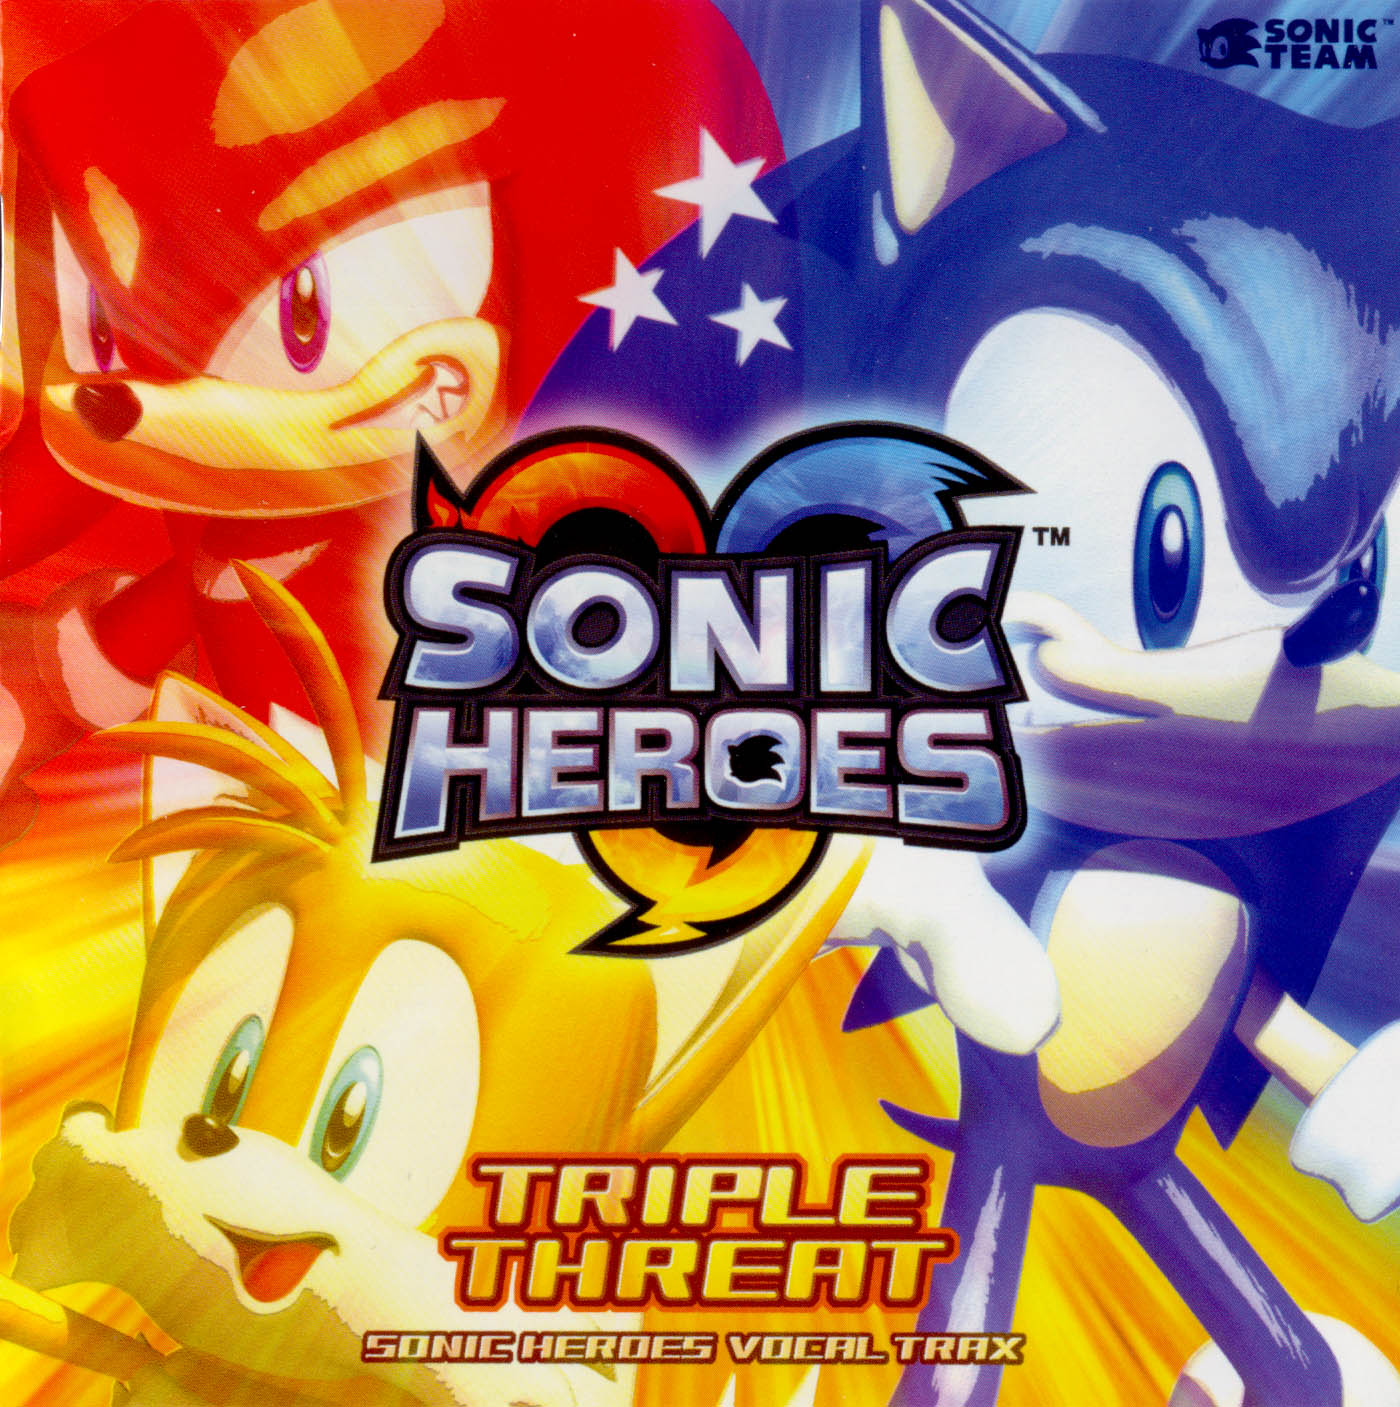 Team Chaotix - Sonic the Hedgehog - Sonic Heroes